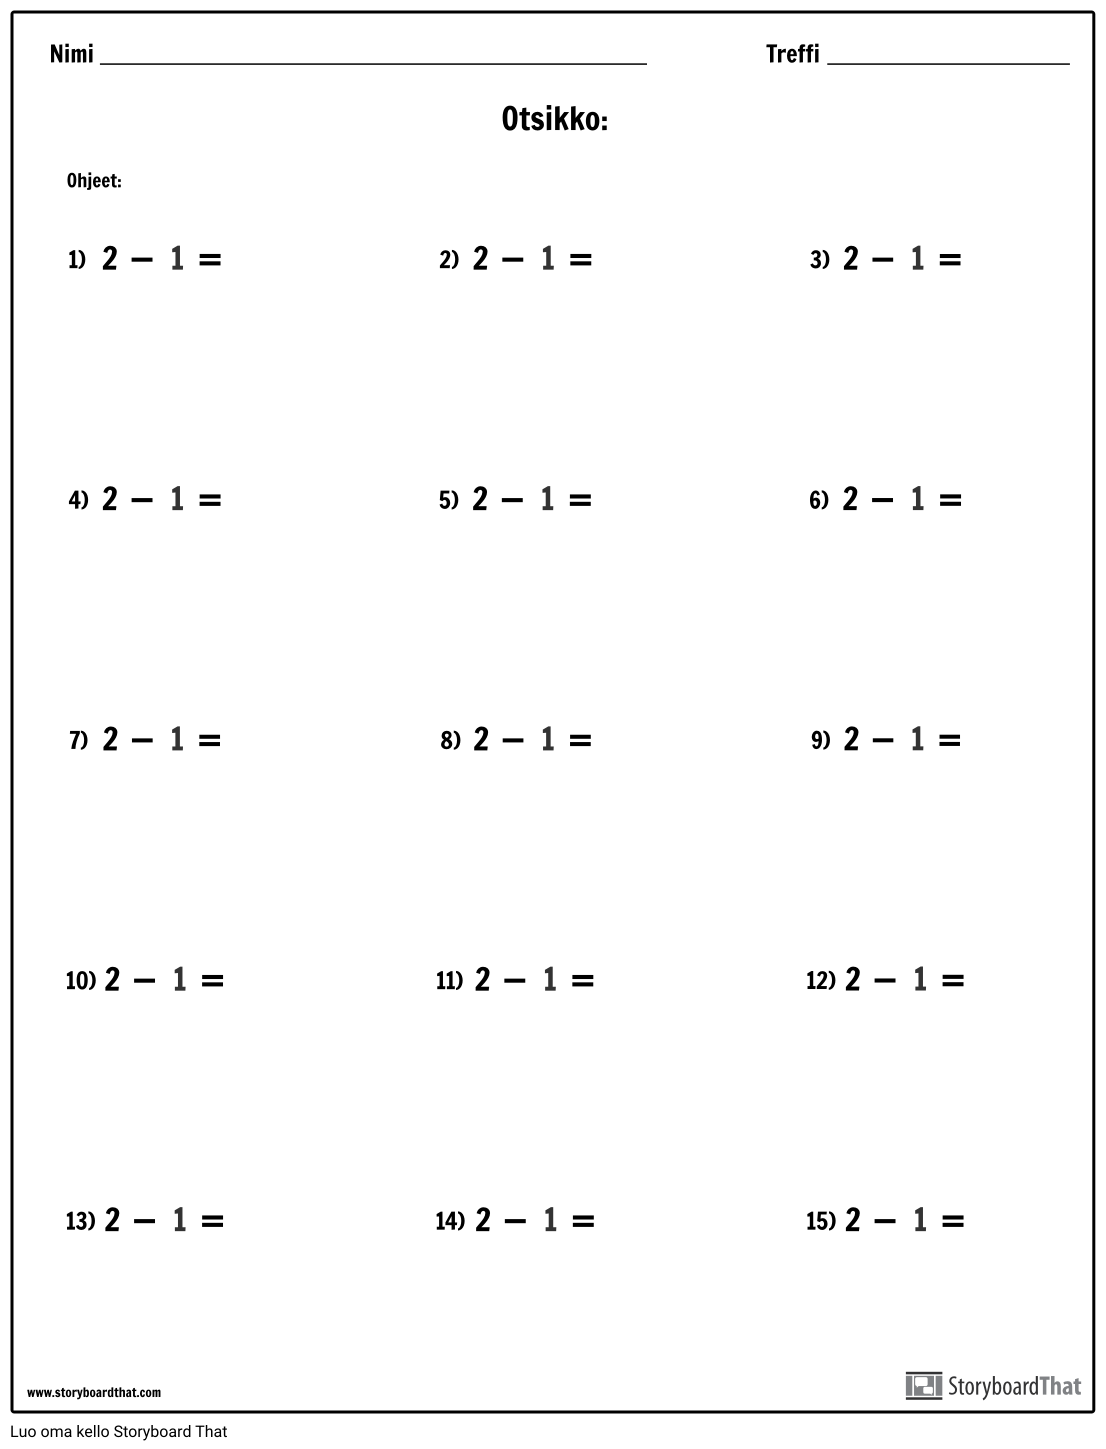 Subtraction - Single Number - Versio 1